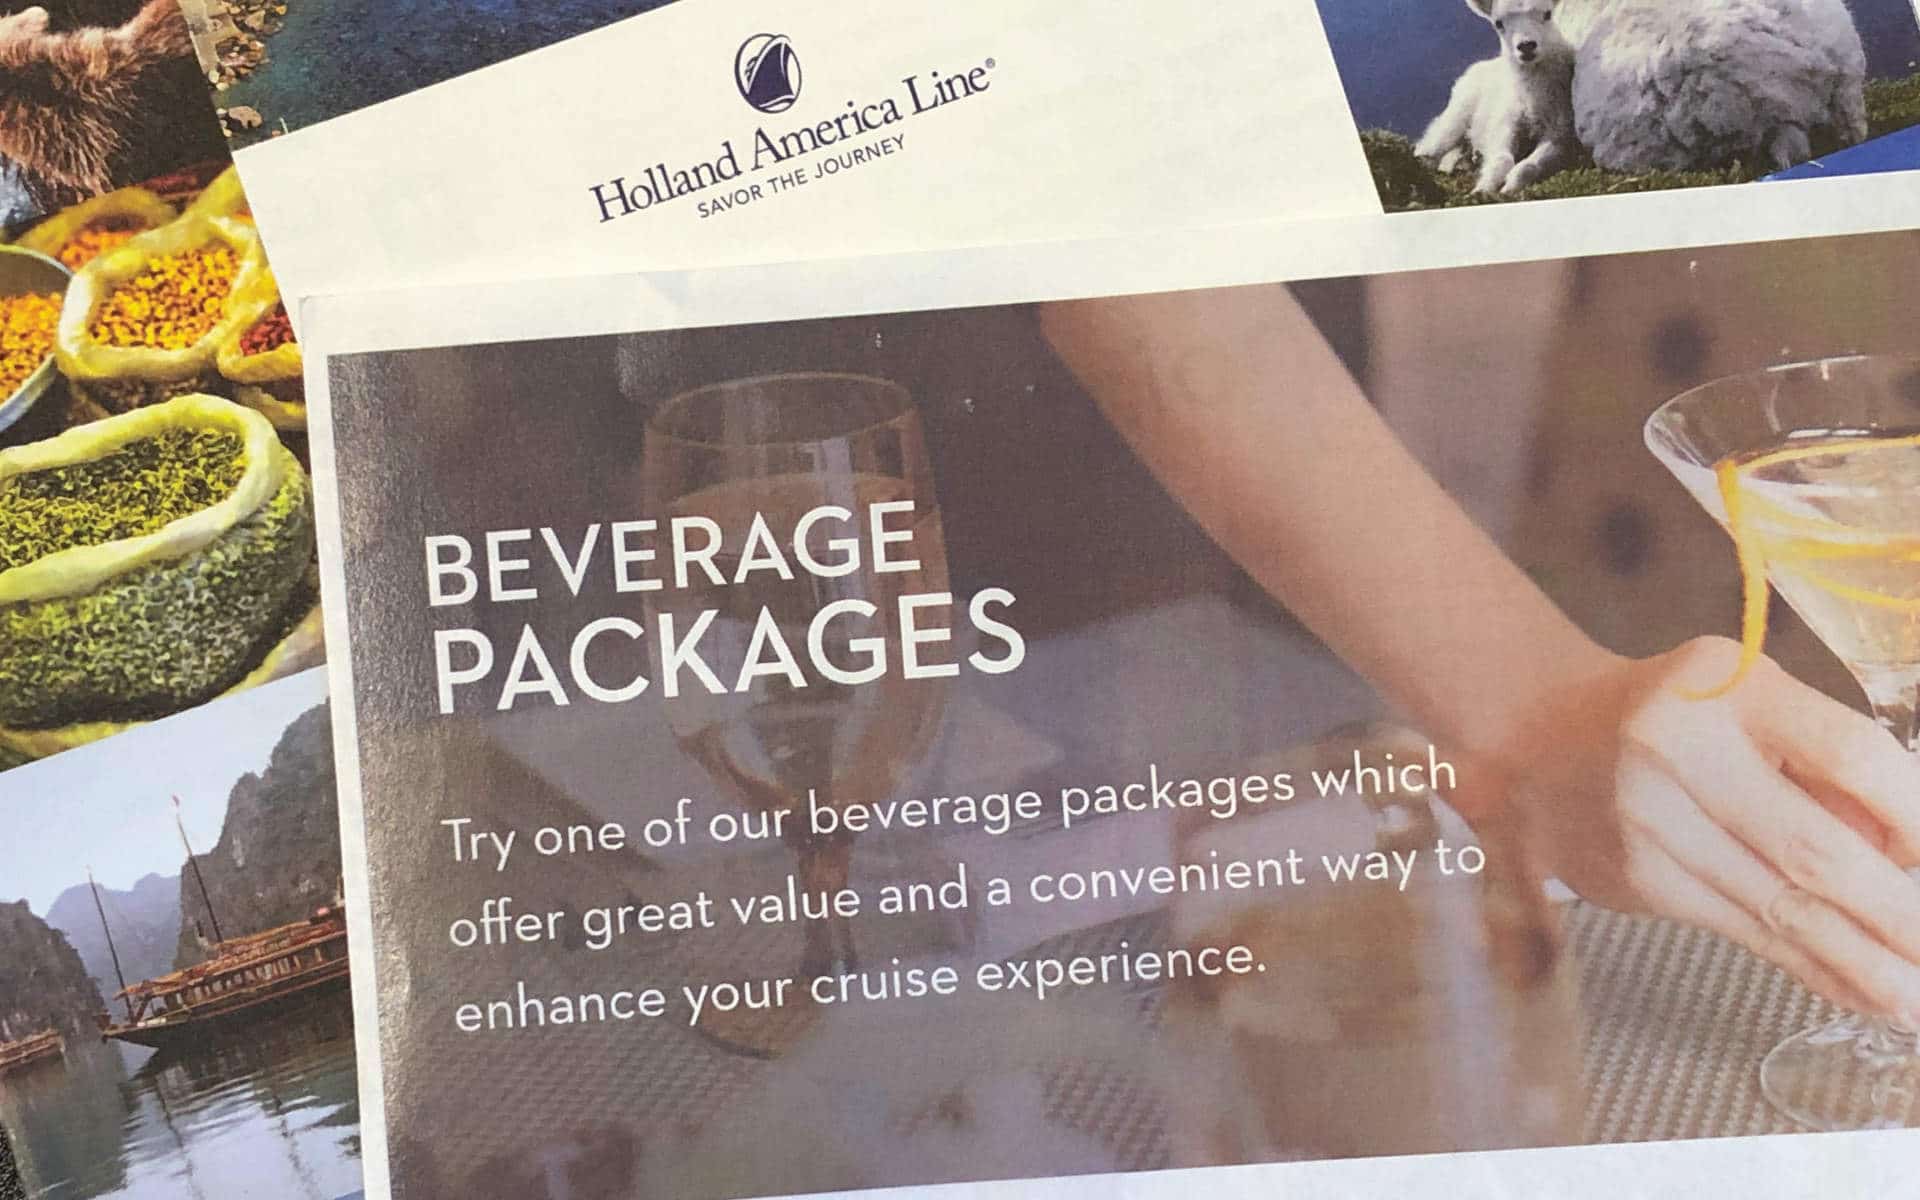 A Holland America Line beveragp package brochure.